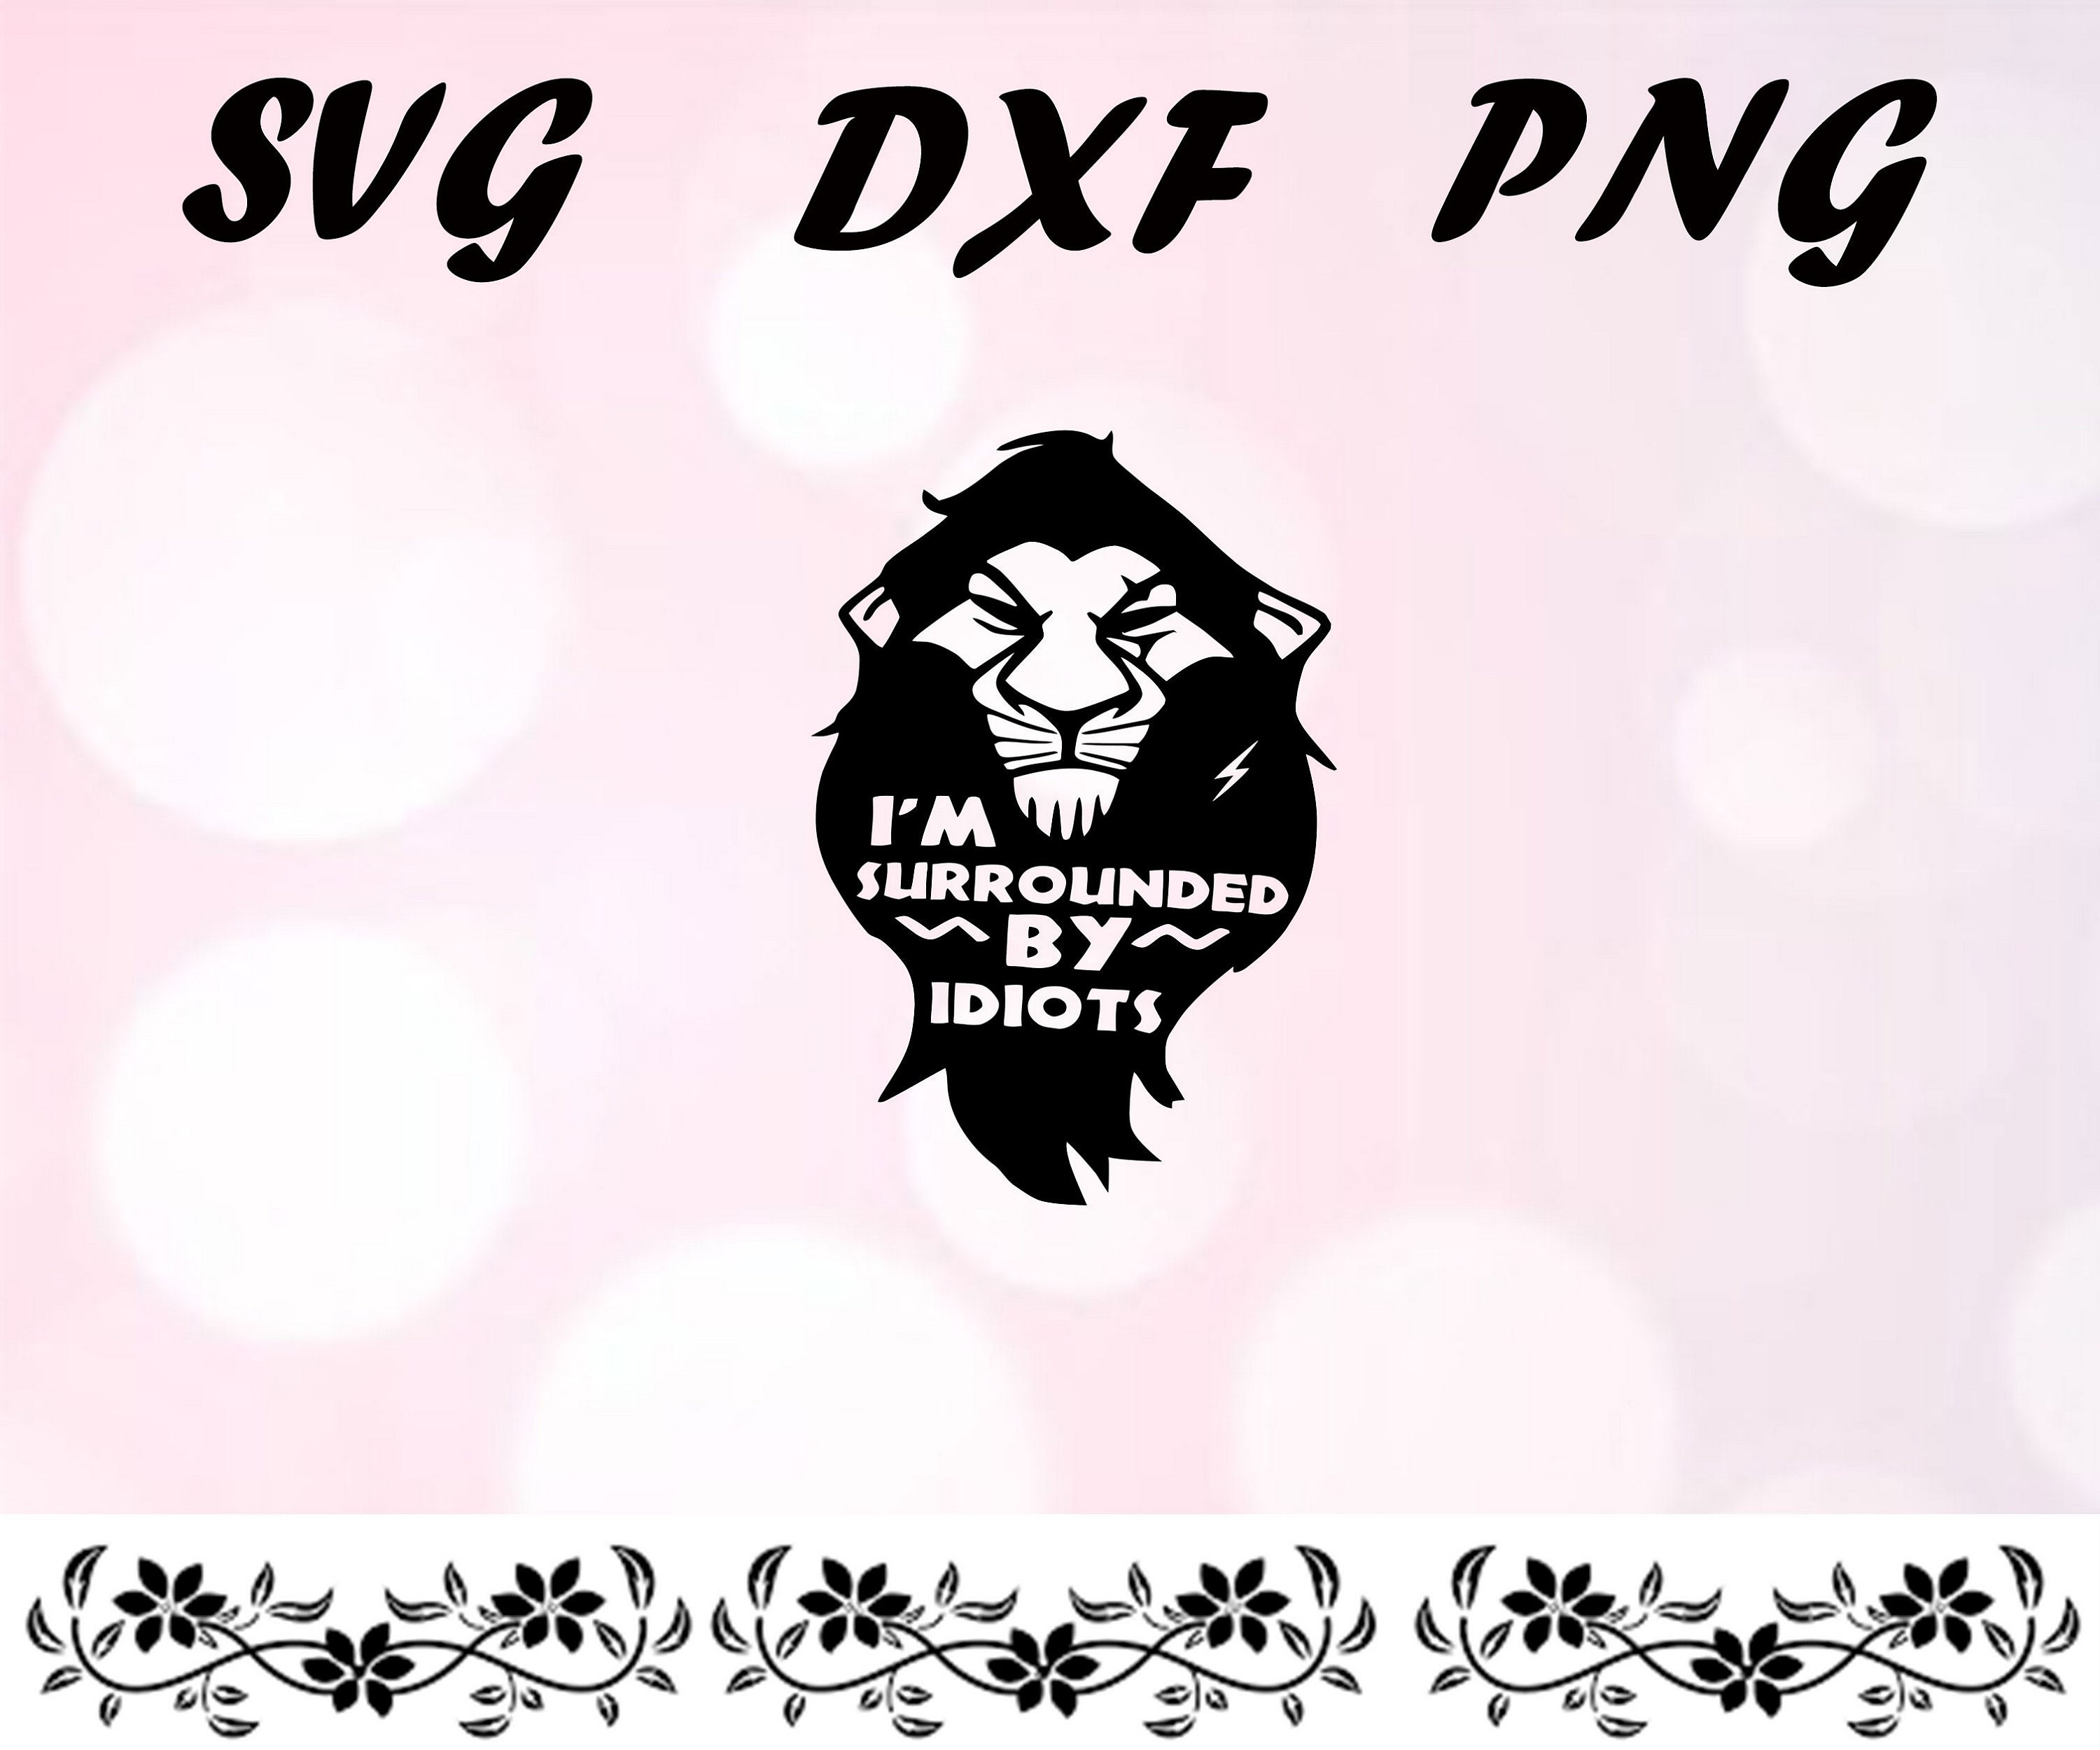 Lion king silhouette svg dxf png Lion king cricut image | Etsy